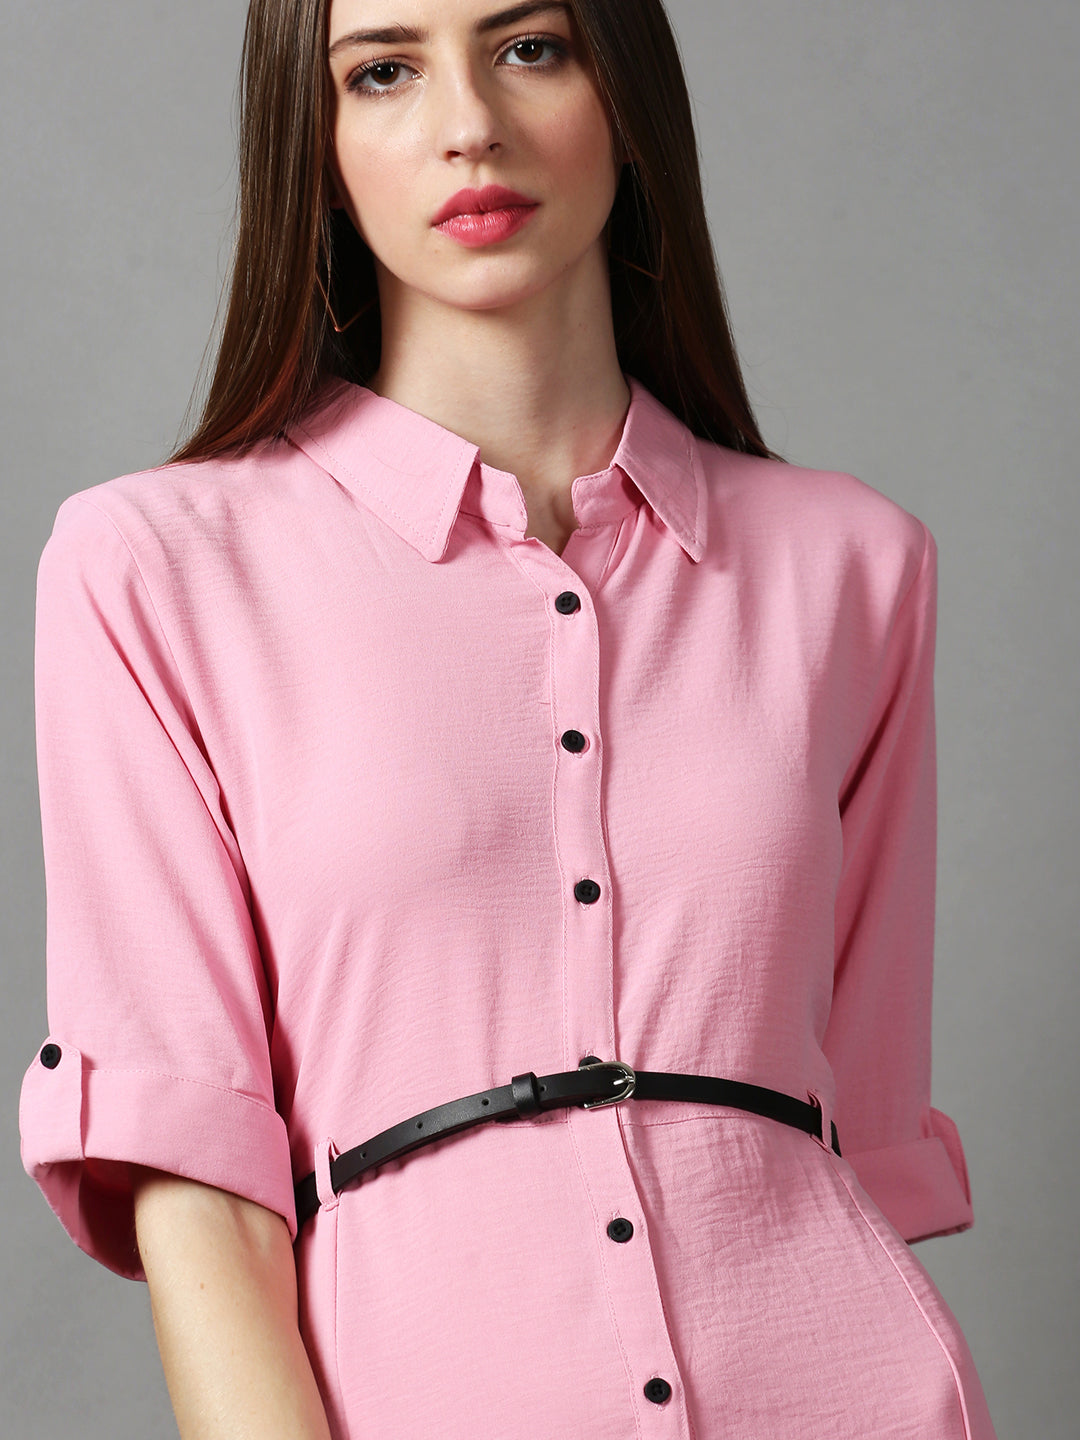 Women's Pink Solid A-Line Dress